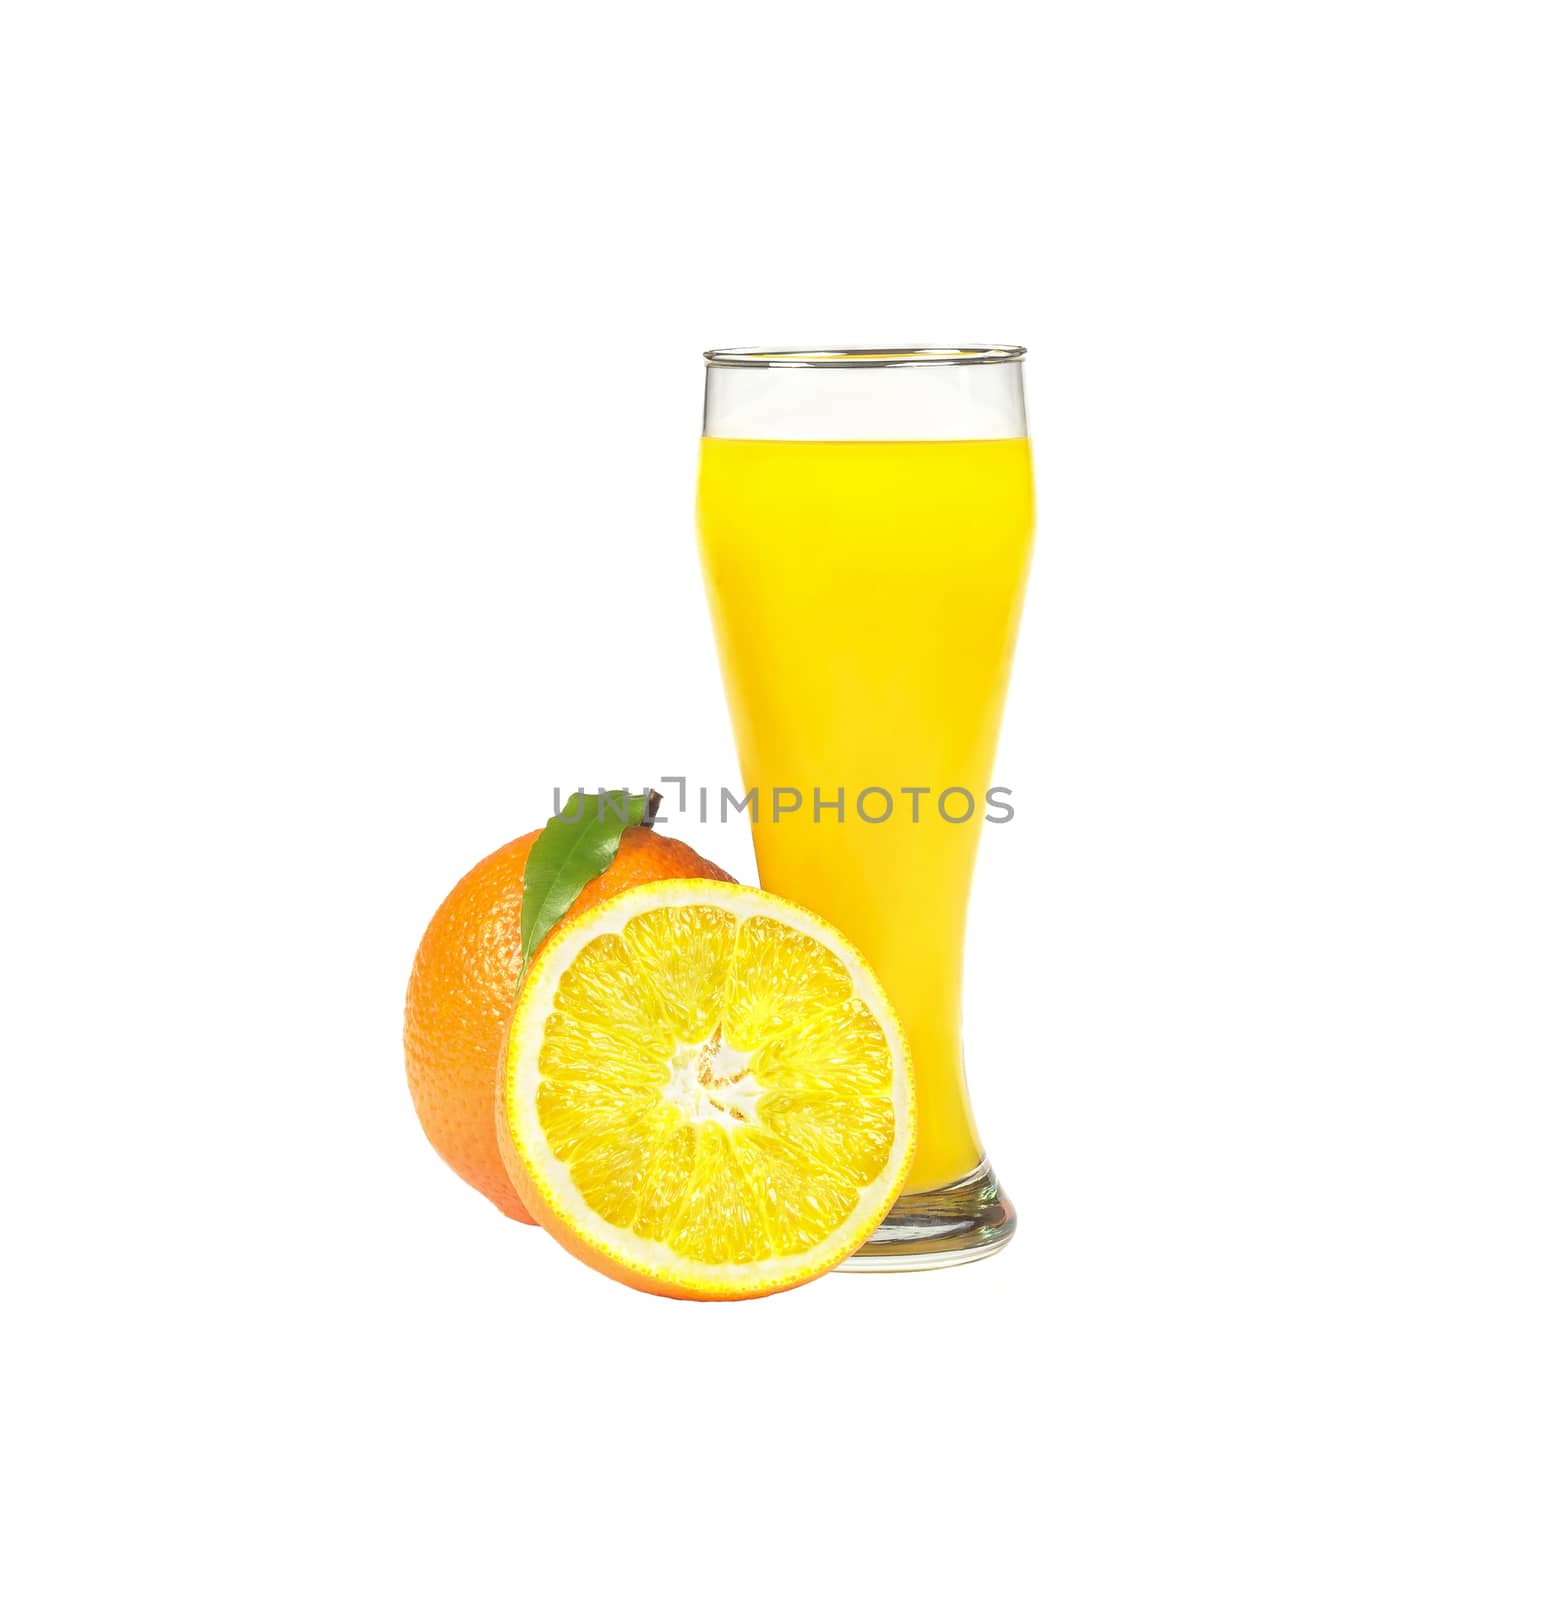 Whole orange, half of an orange and a tall glass of orange juice on white background